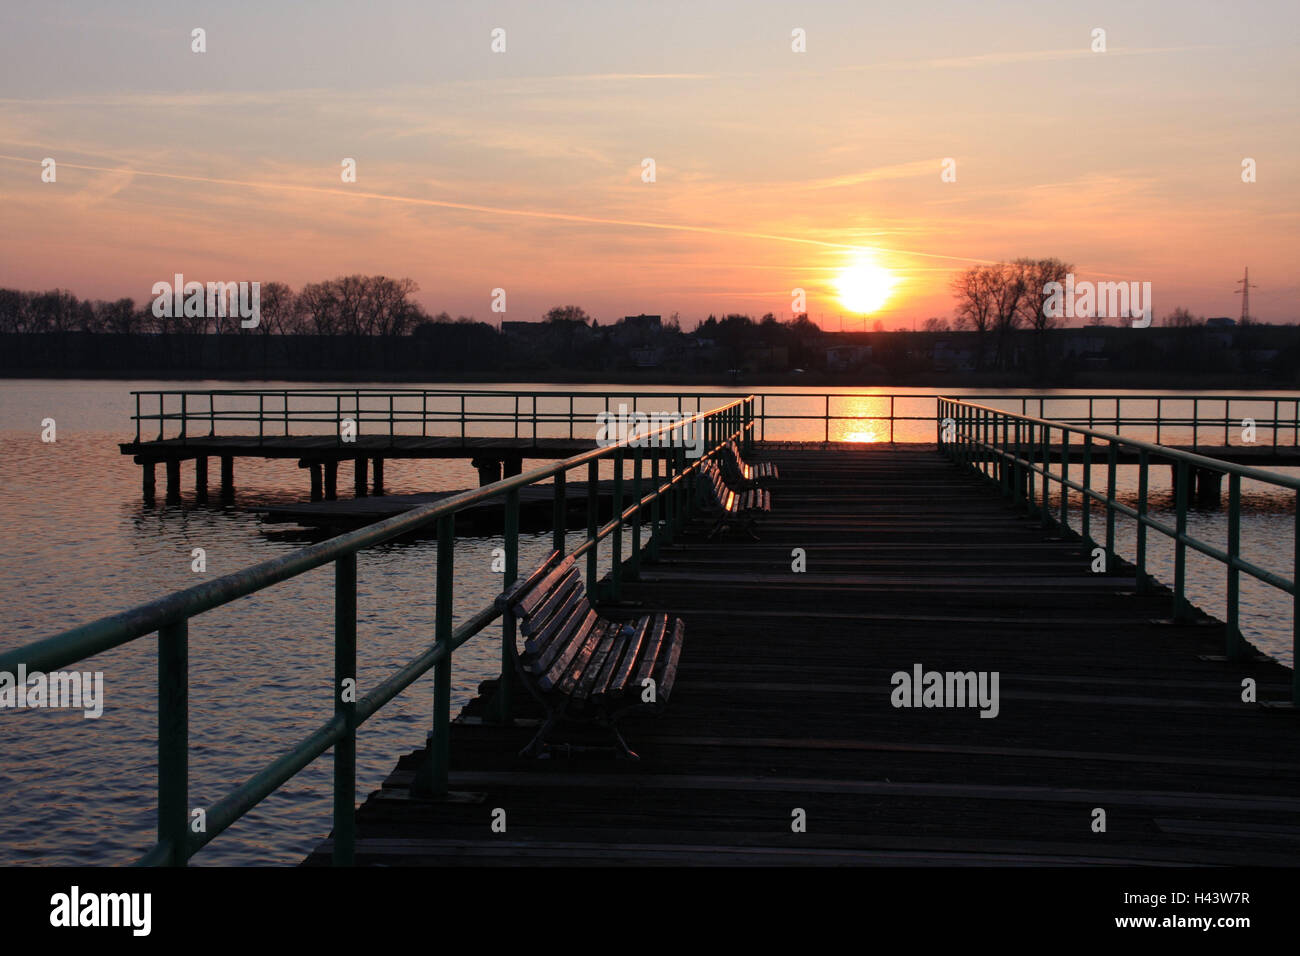 Poland, province poses, Zniner lake, bridge, sundown, nature, evening, deserted, platform, saddles, the sun, afterglow, back light, Stock Photo